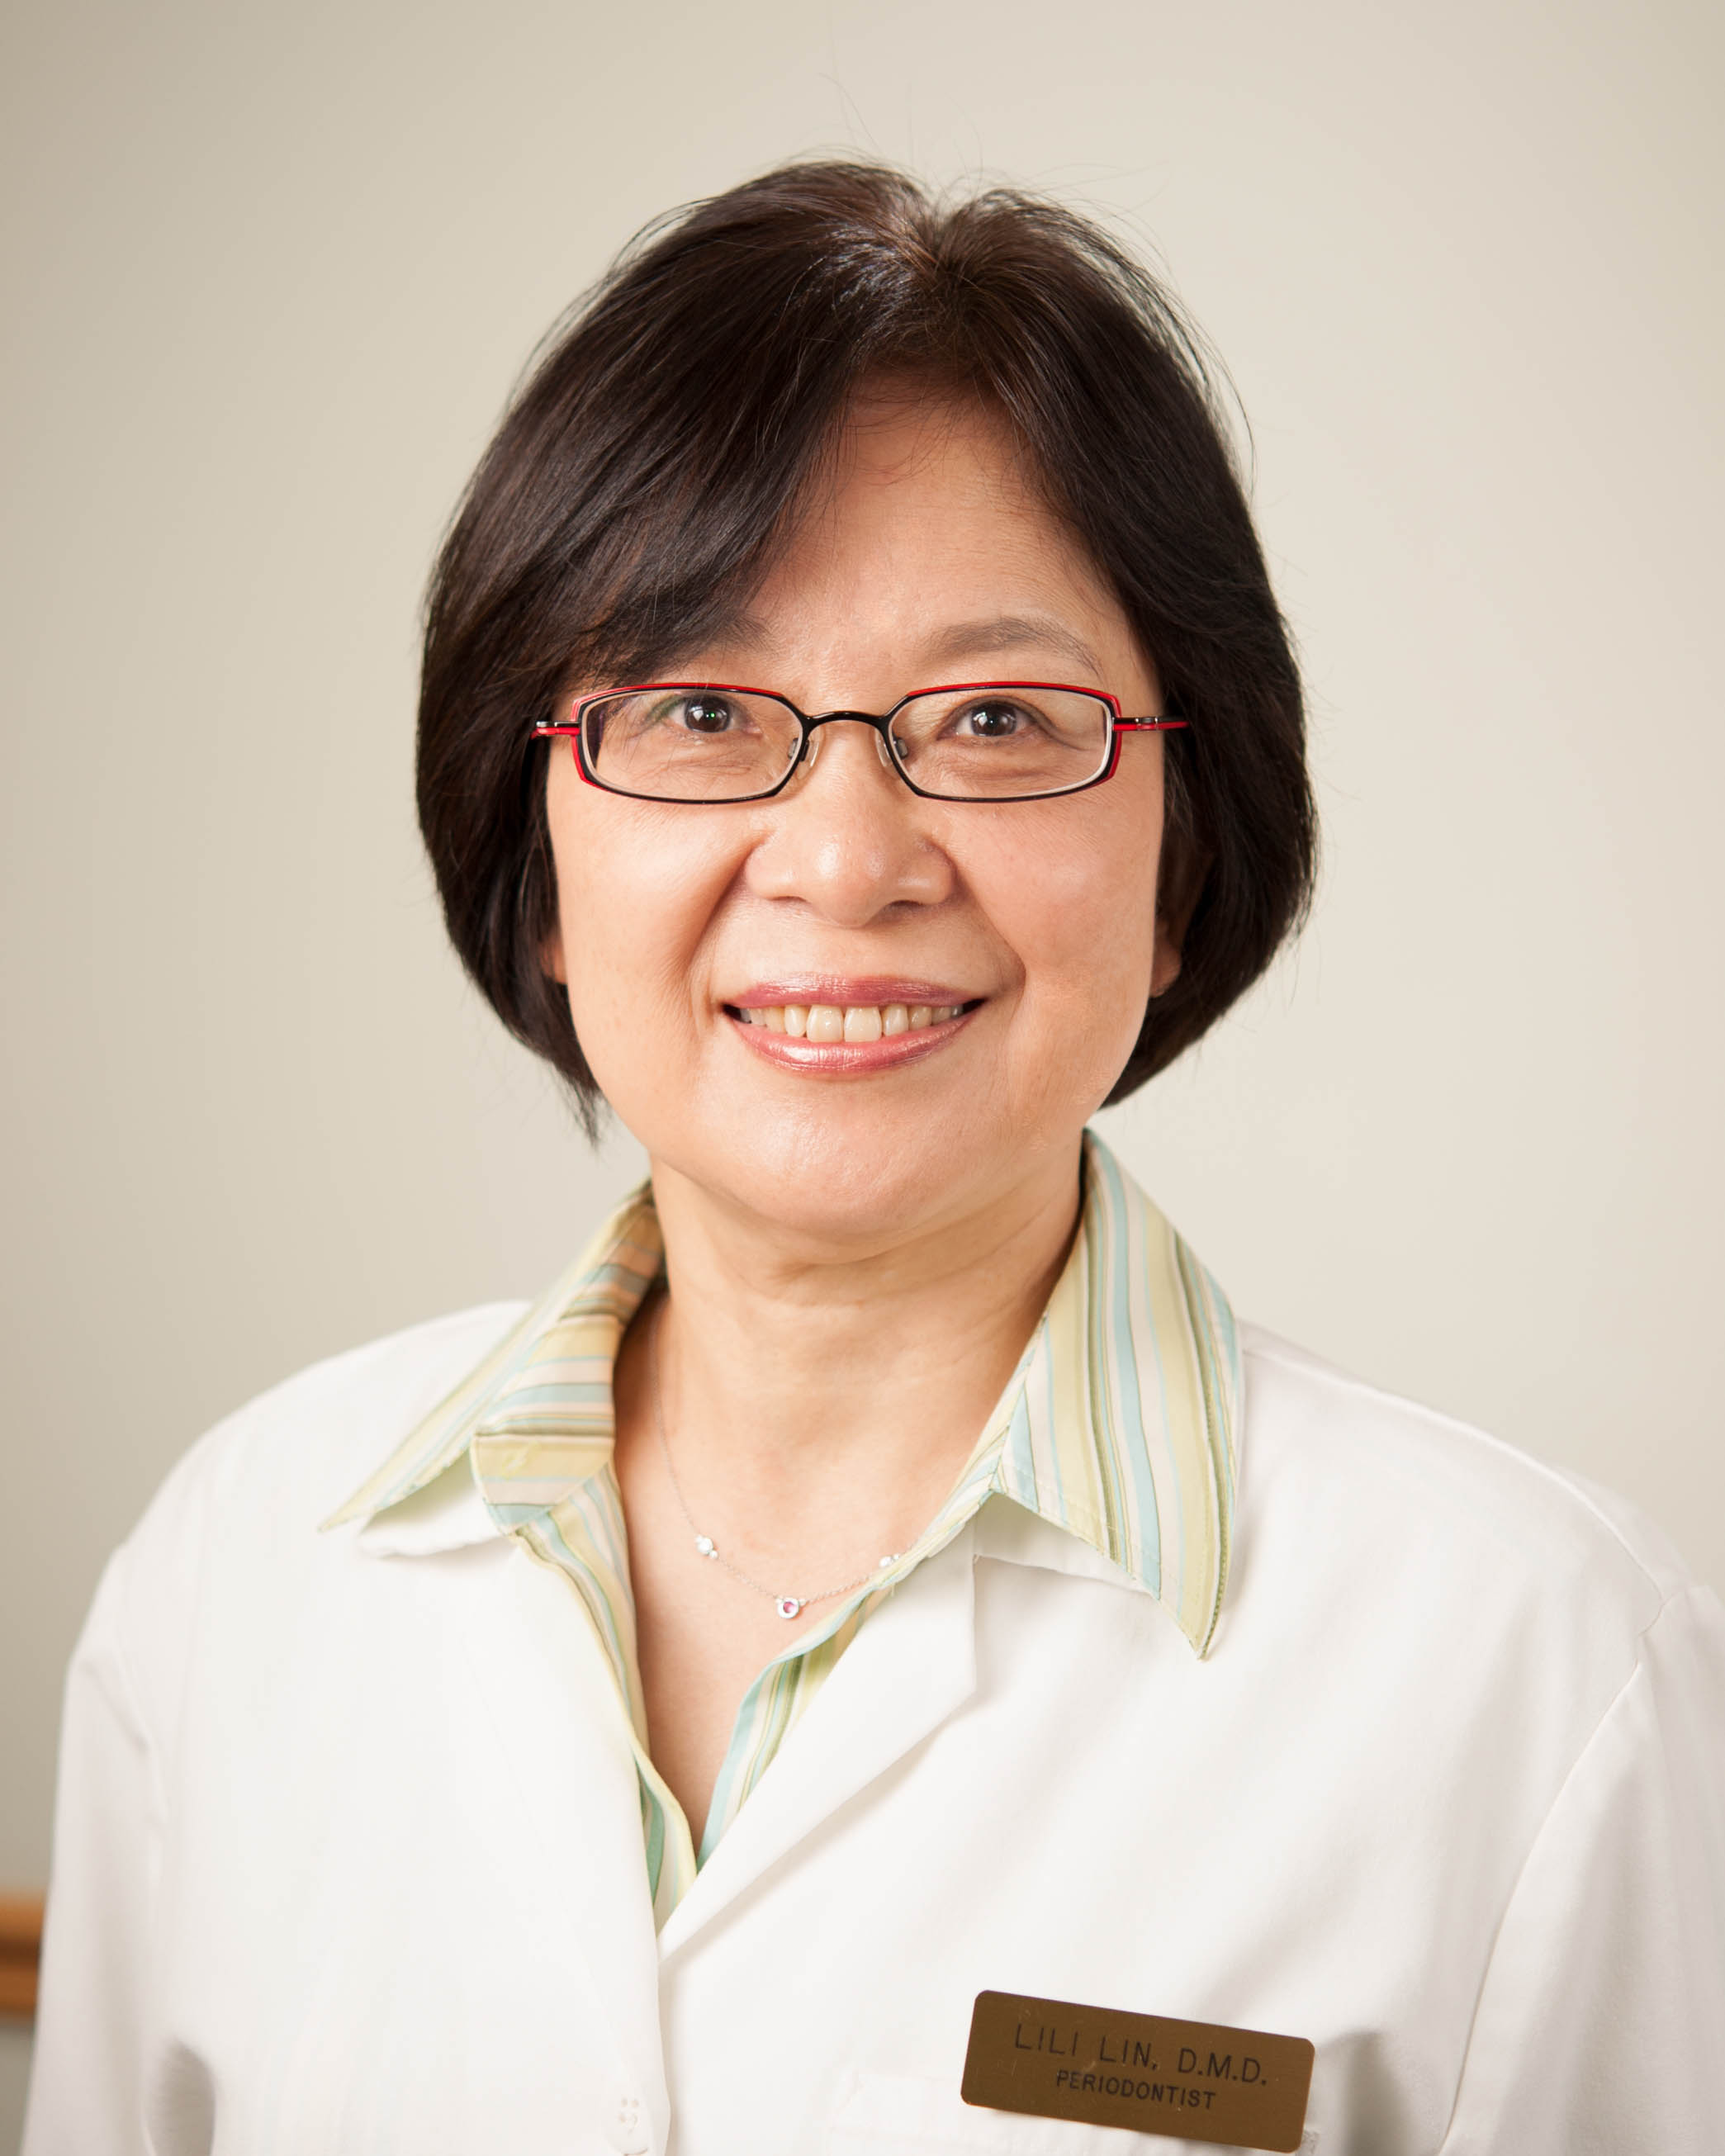 Dr. LiLi Lin